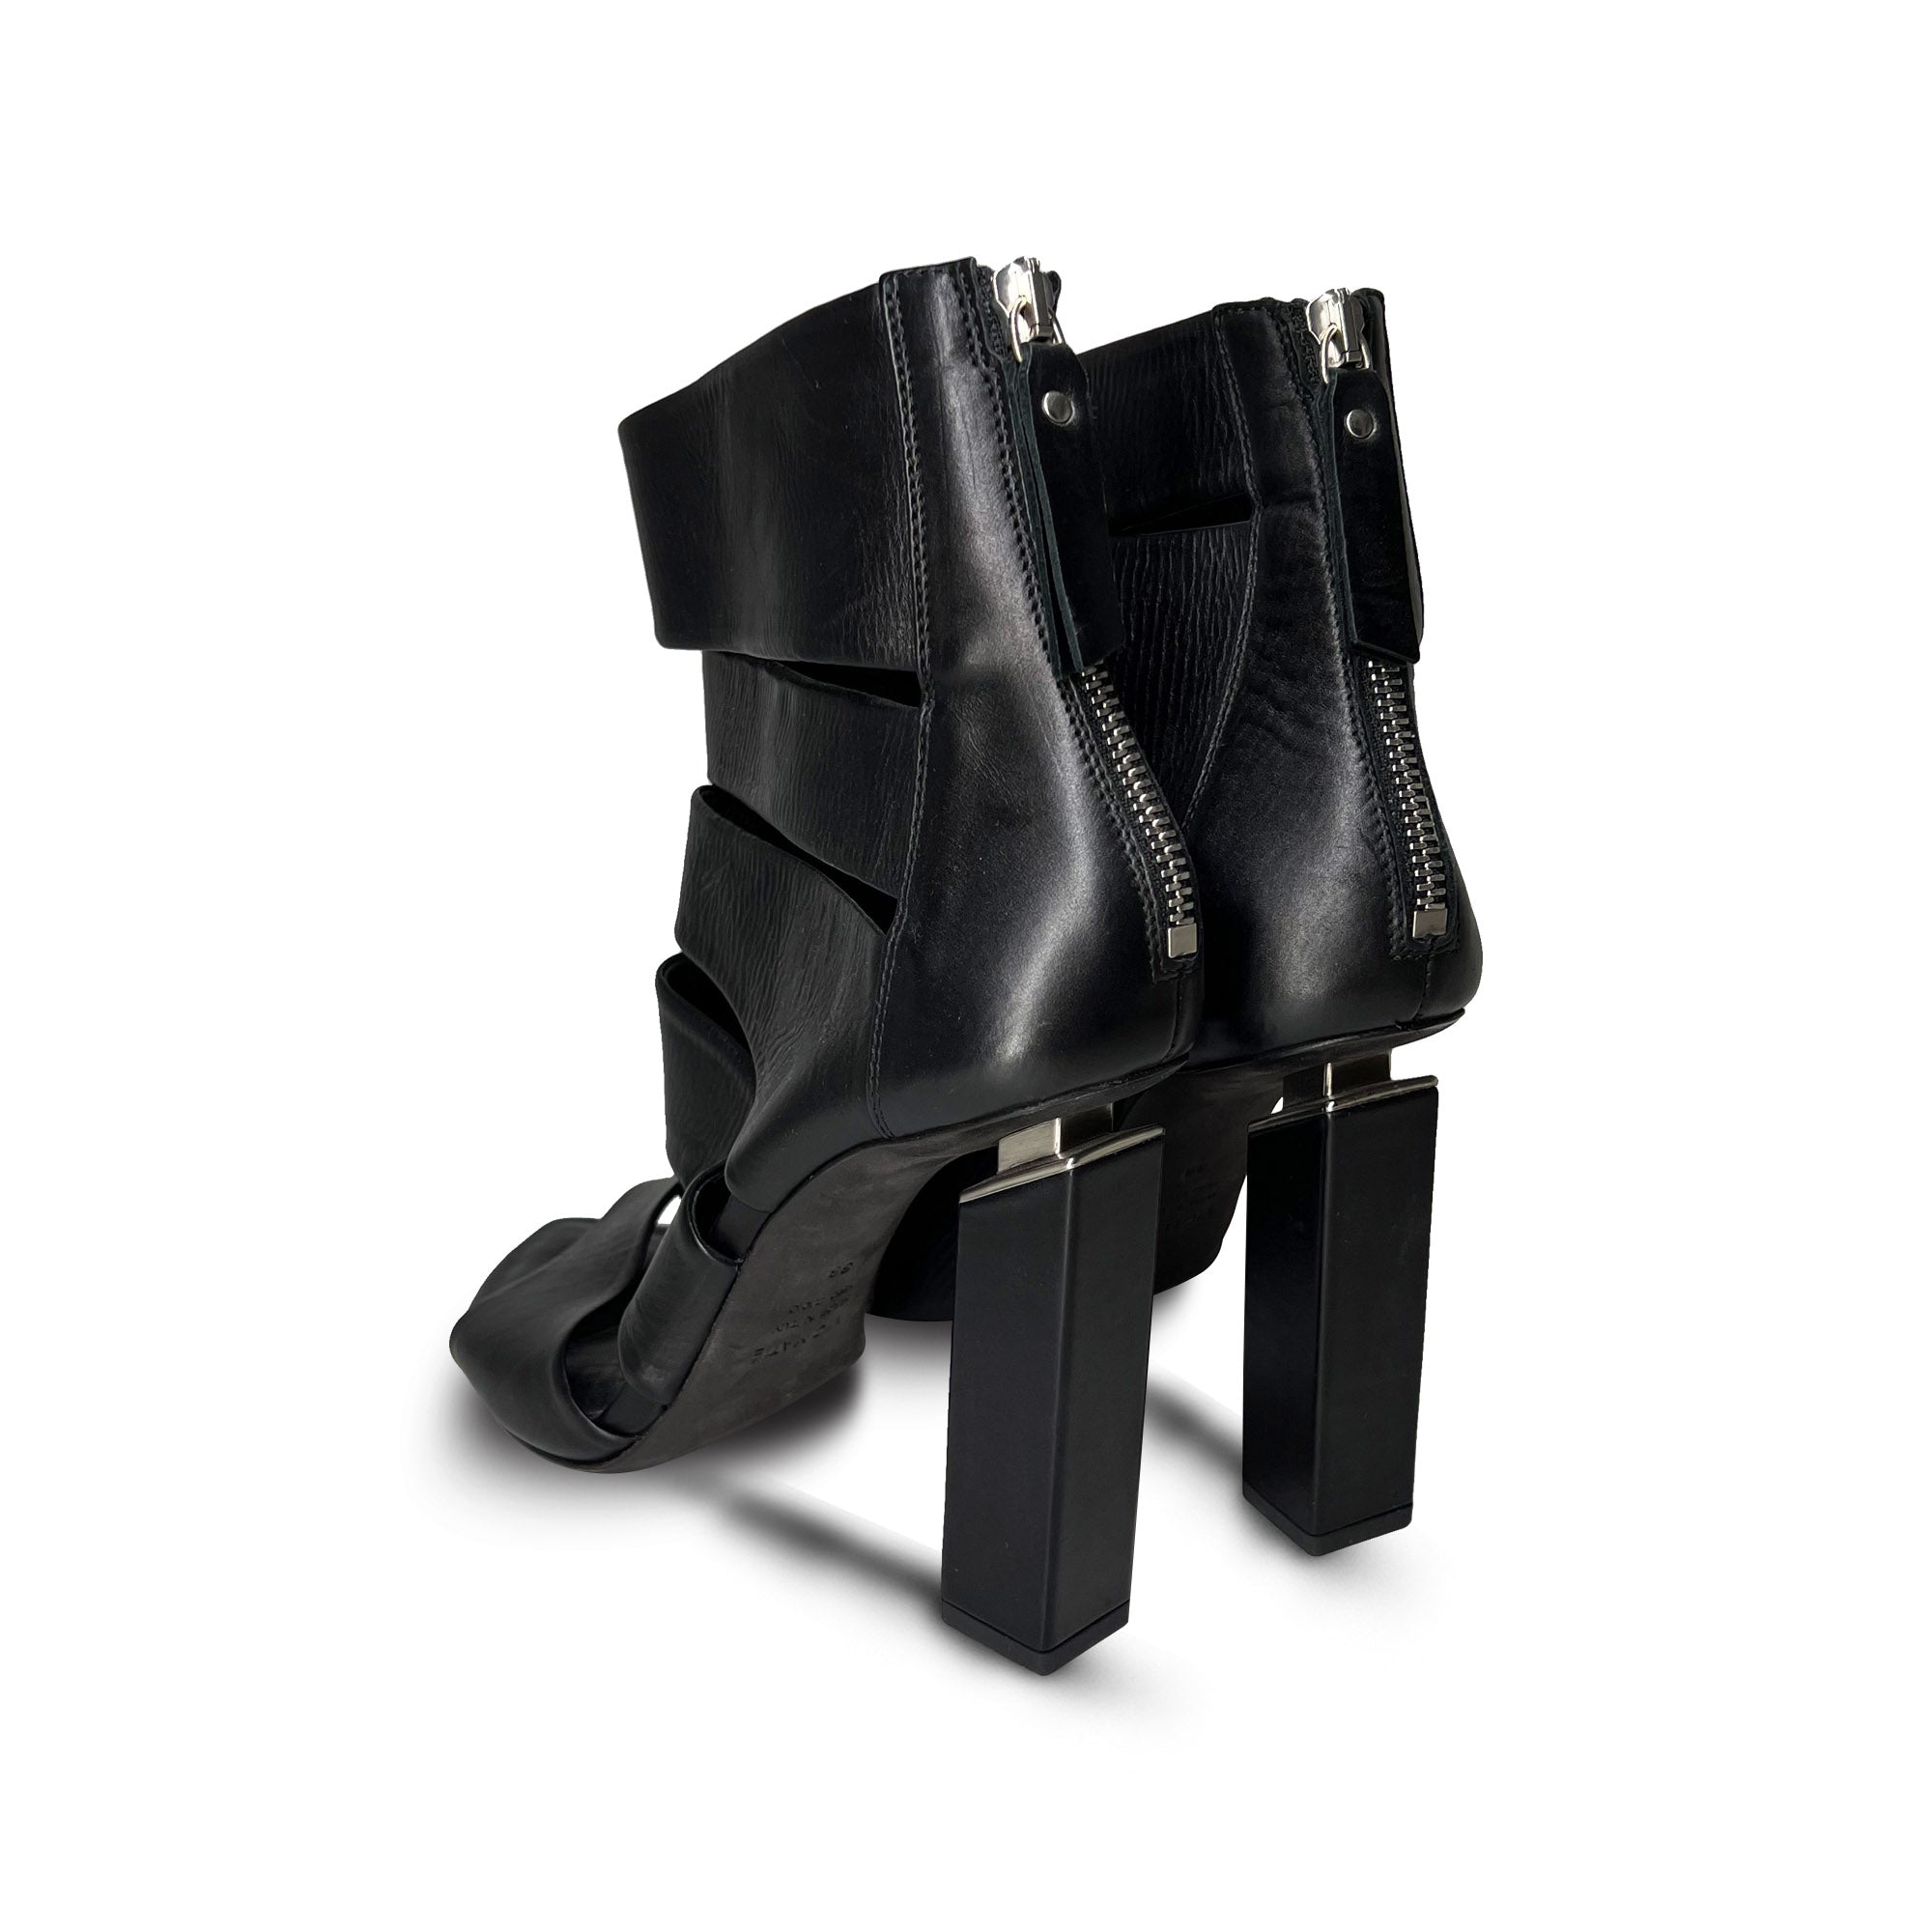 Vic Matie leather high heel sandals black